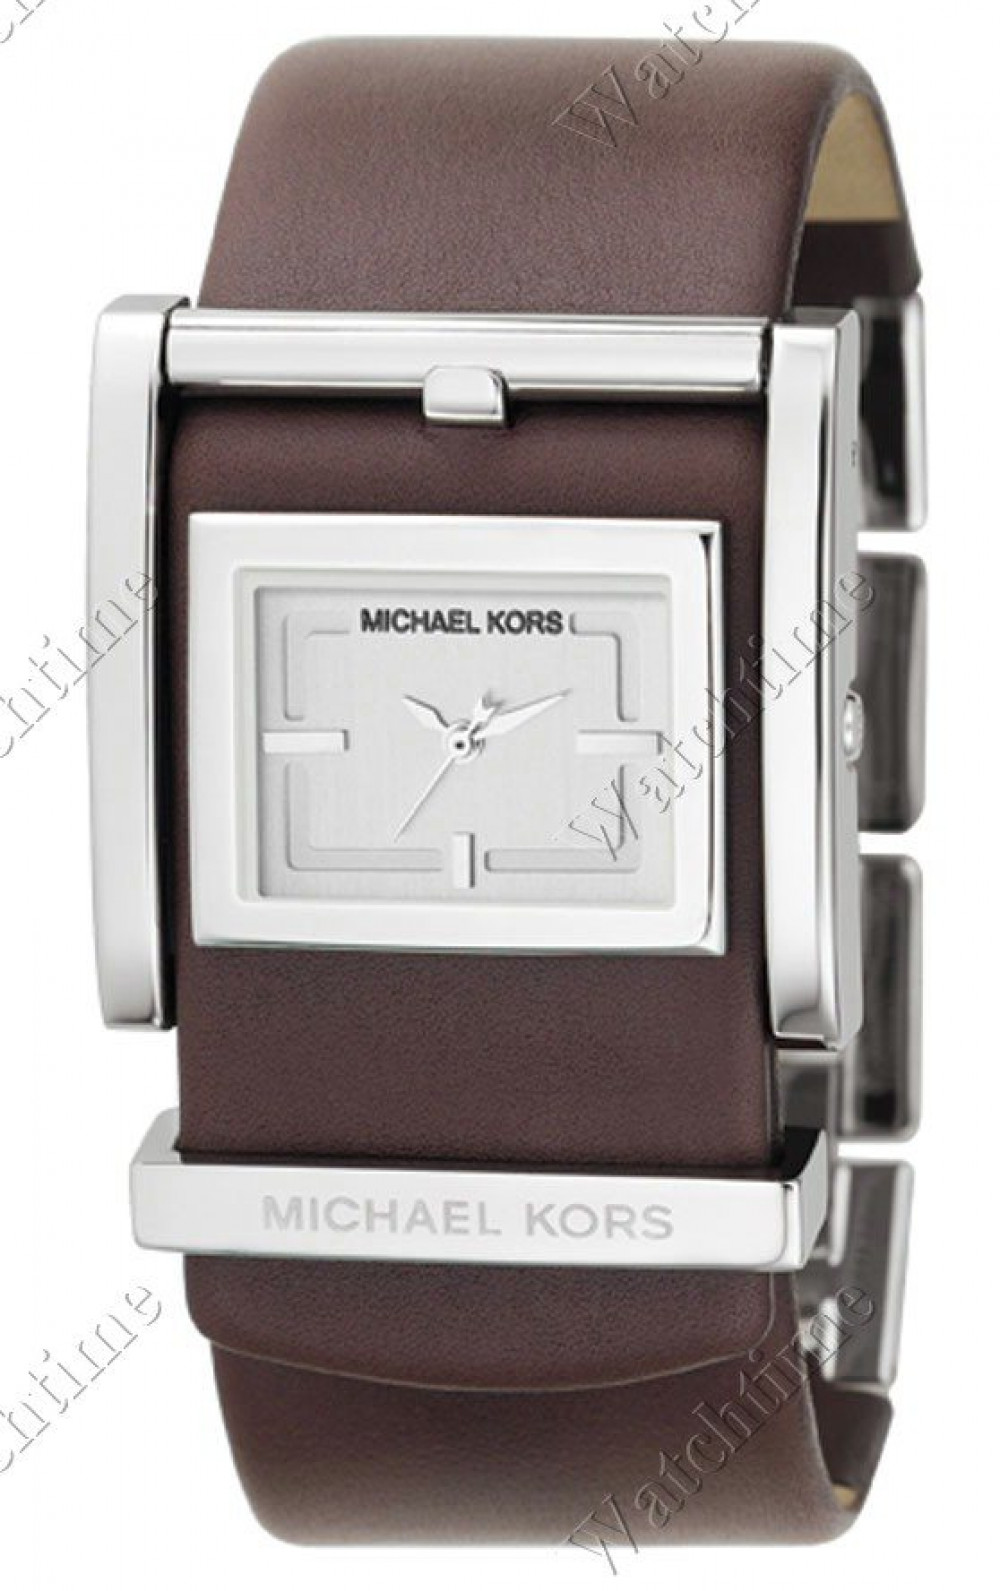 Zegarek firmy Michael Kors, model MK 2121